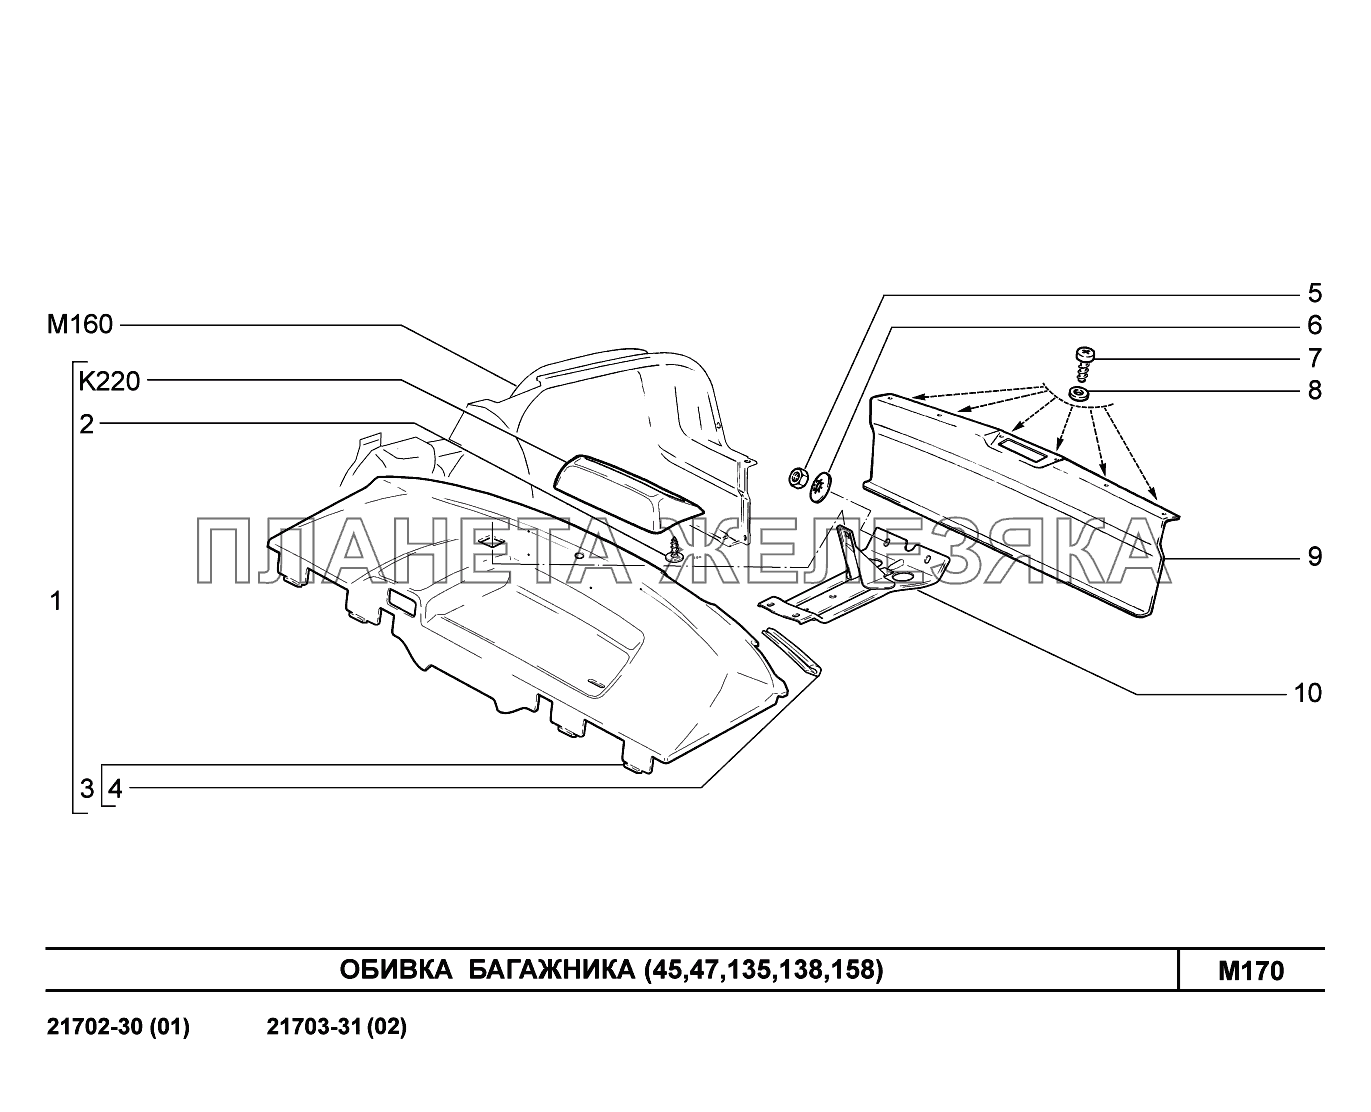 M170. Обивка багажника ВАЗ-2170 